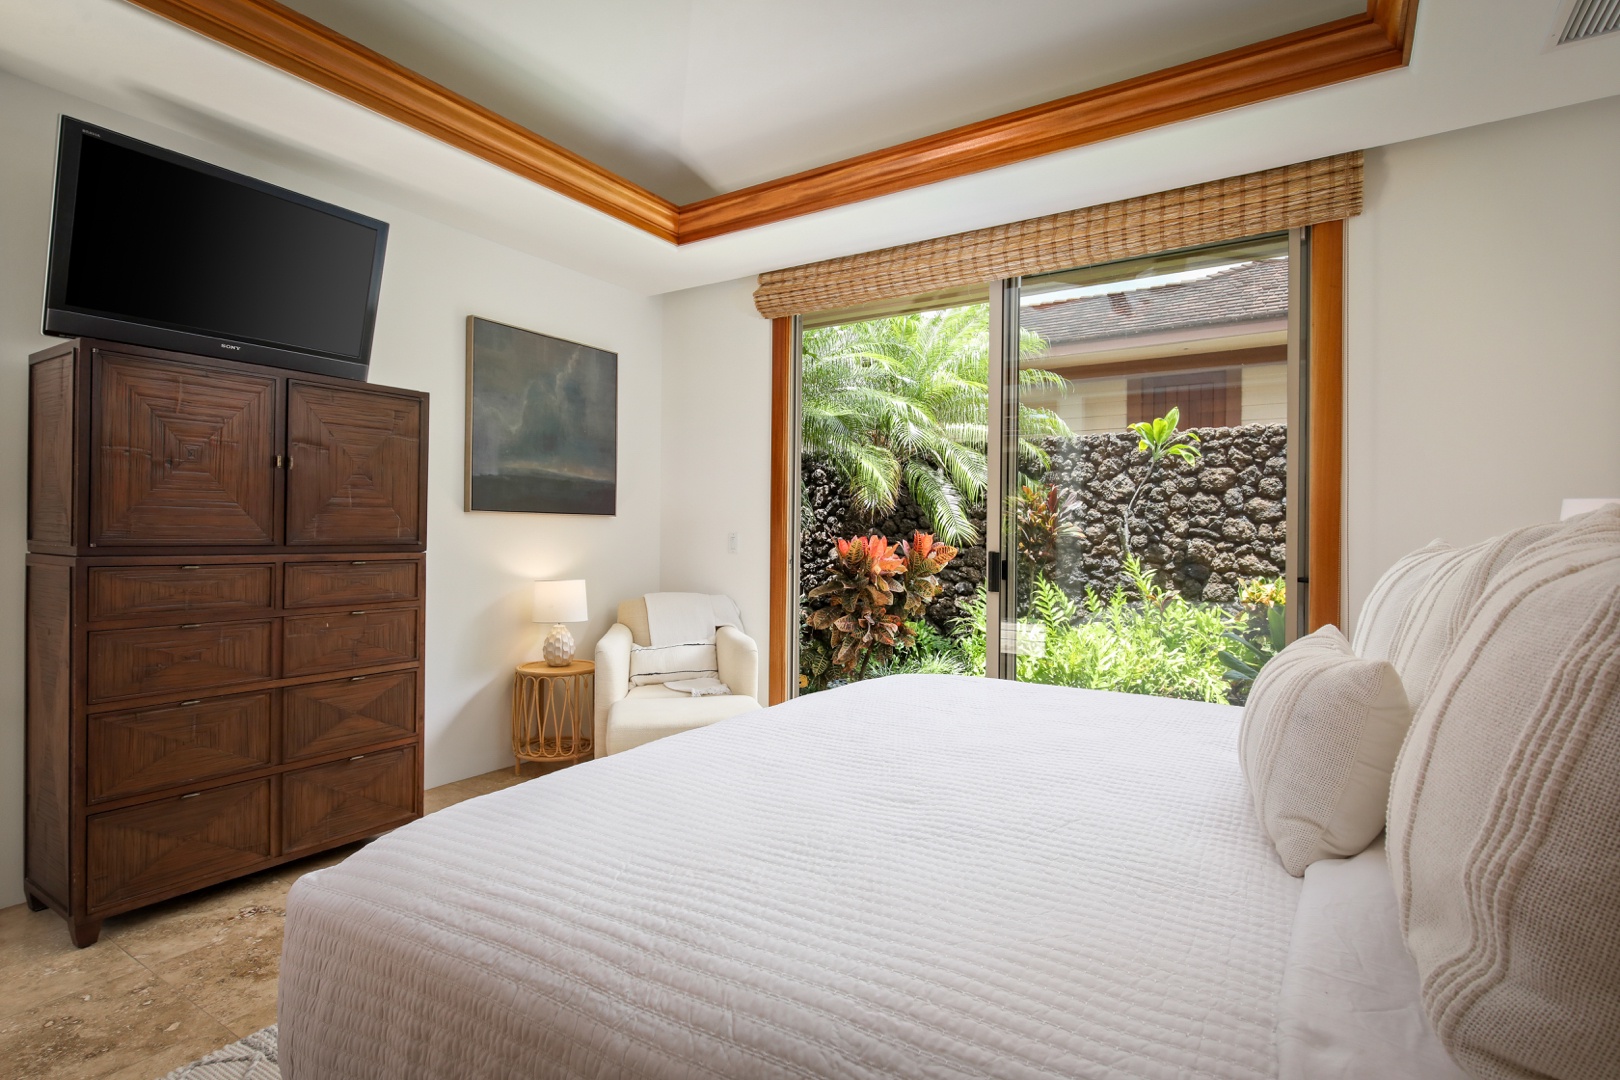 Kailua Kona Vacation Rentals, 4BD Pakui Street (147) Estate Home at Four Seasons Resort at Hualalai - Reverse view of Guest Suite #2.